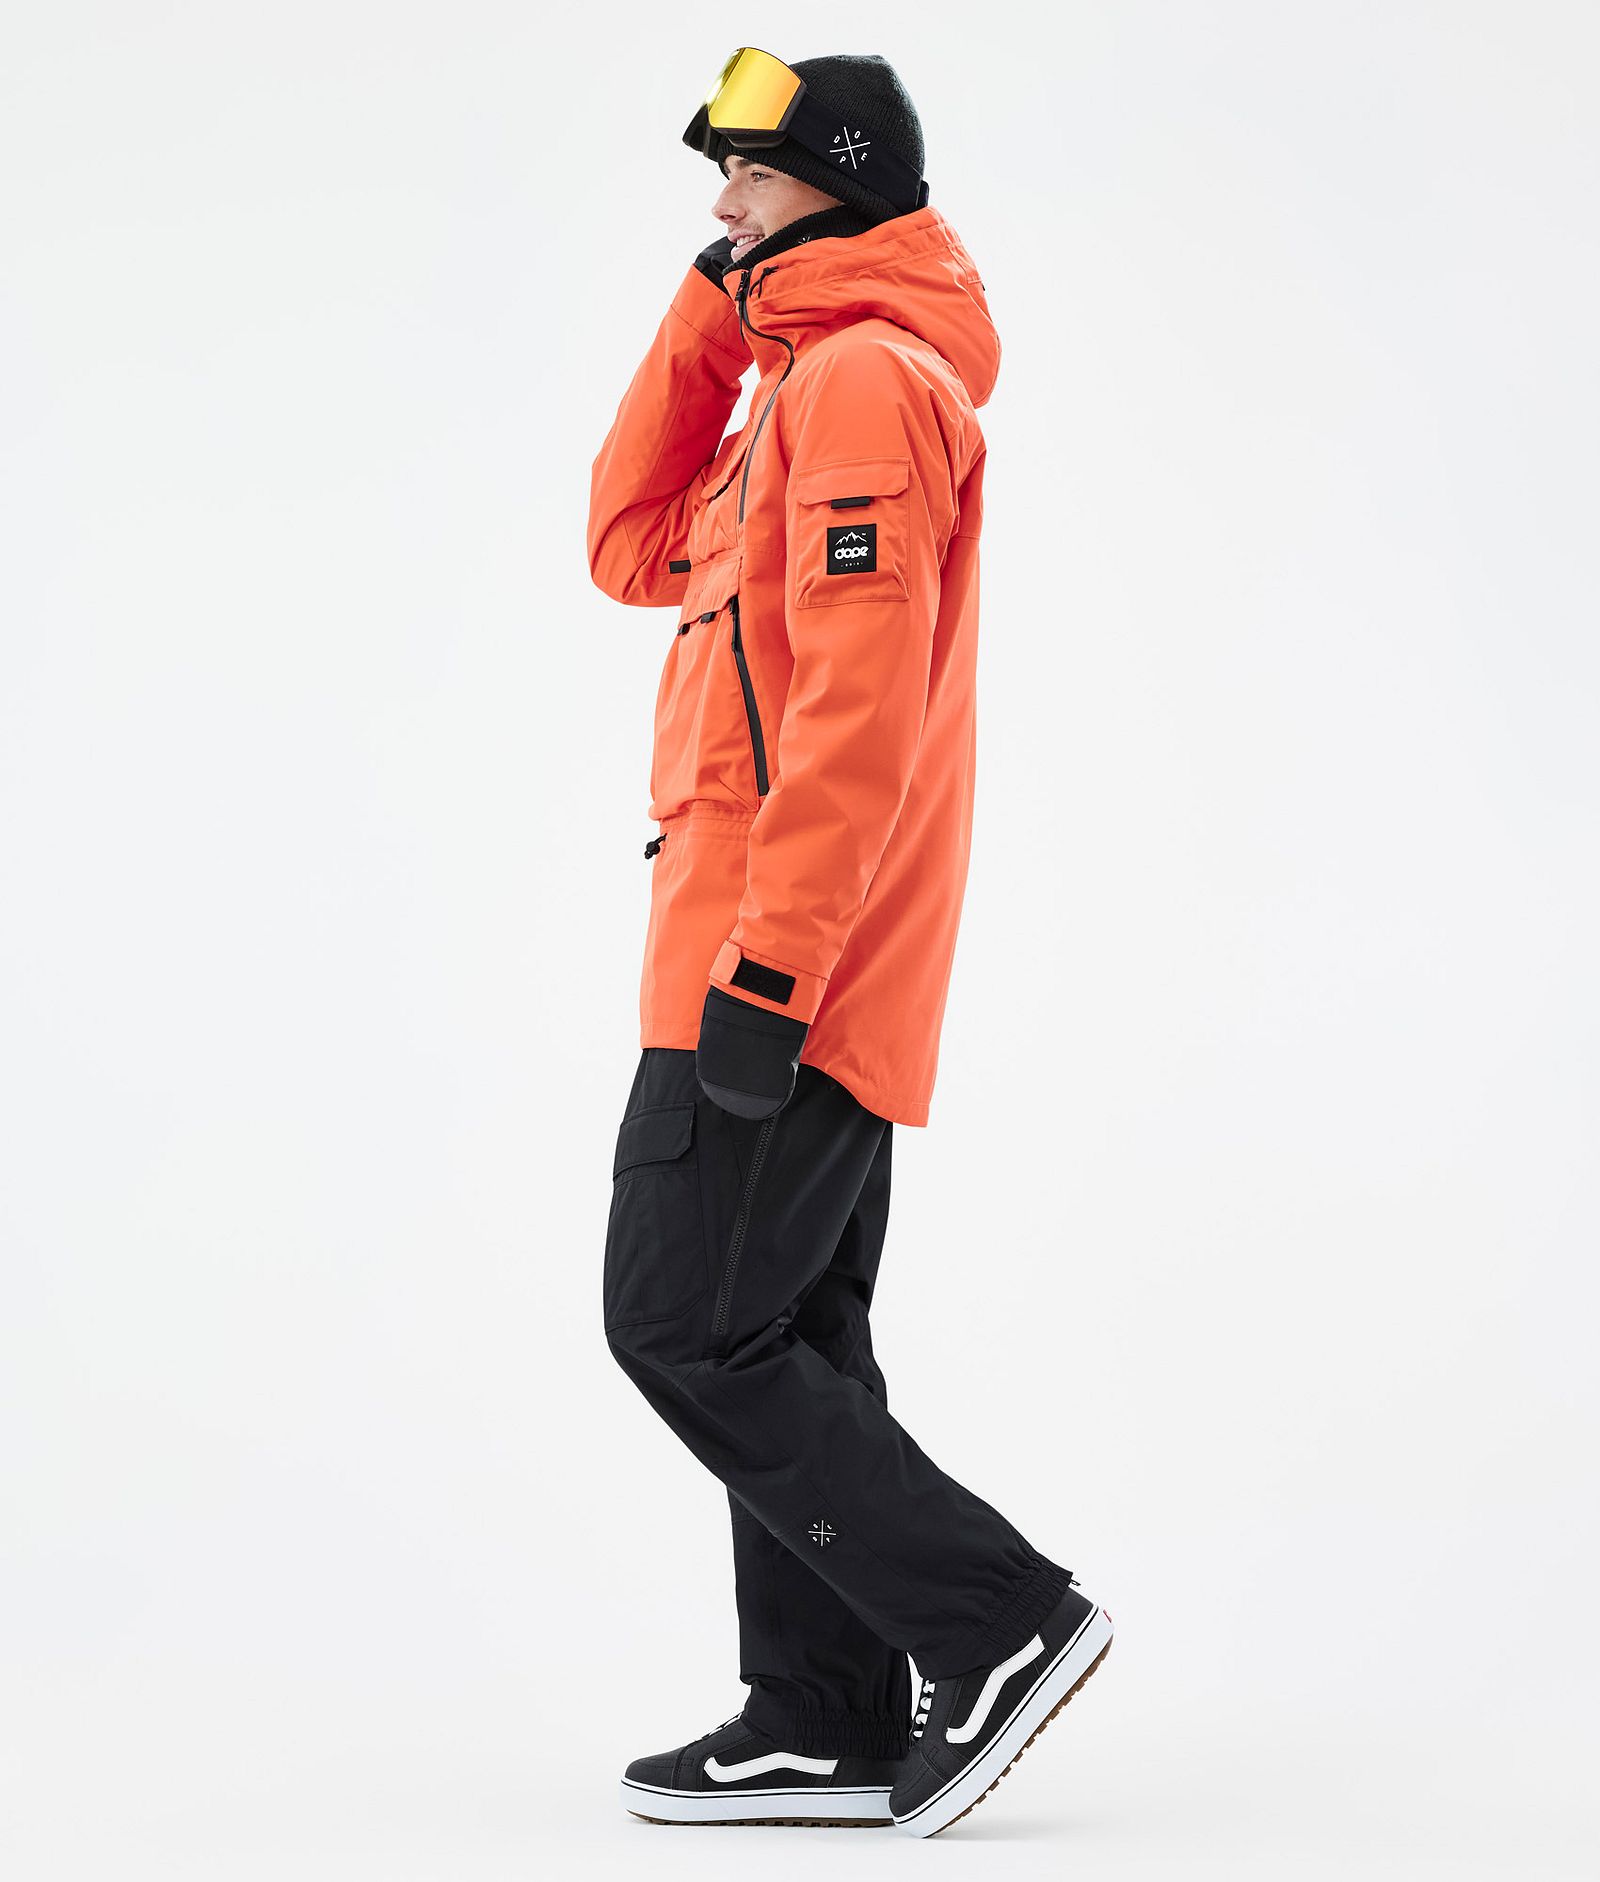 Akin スノーボードジャケット メンズ Orange